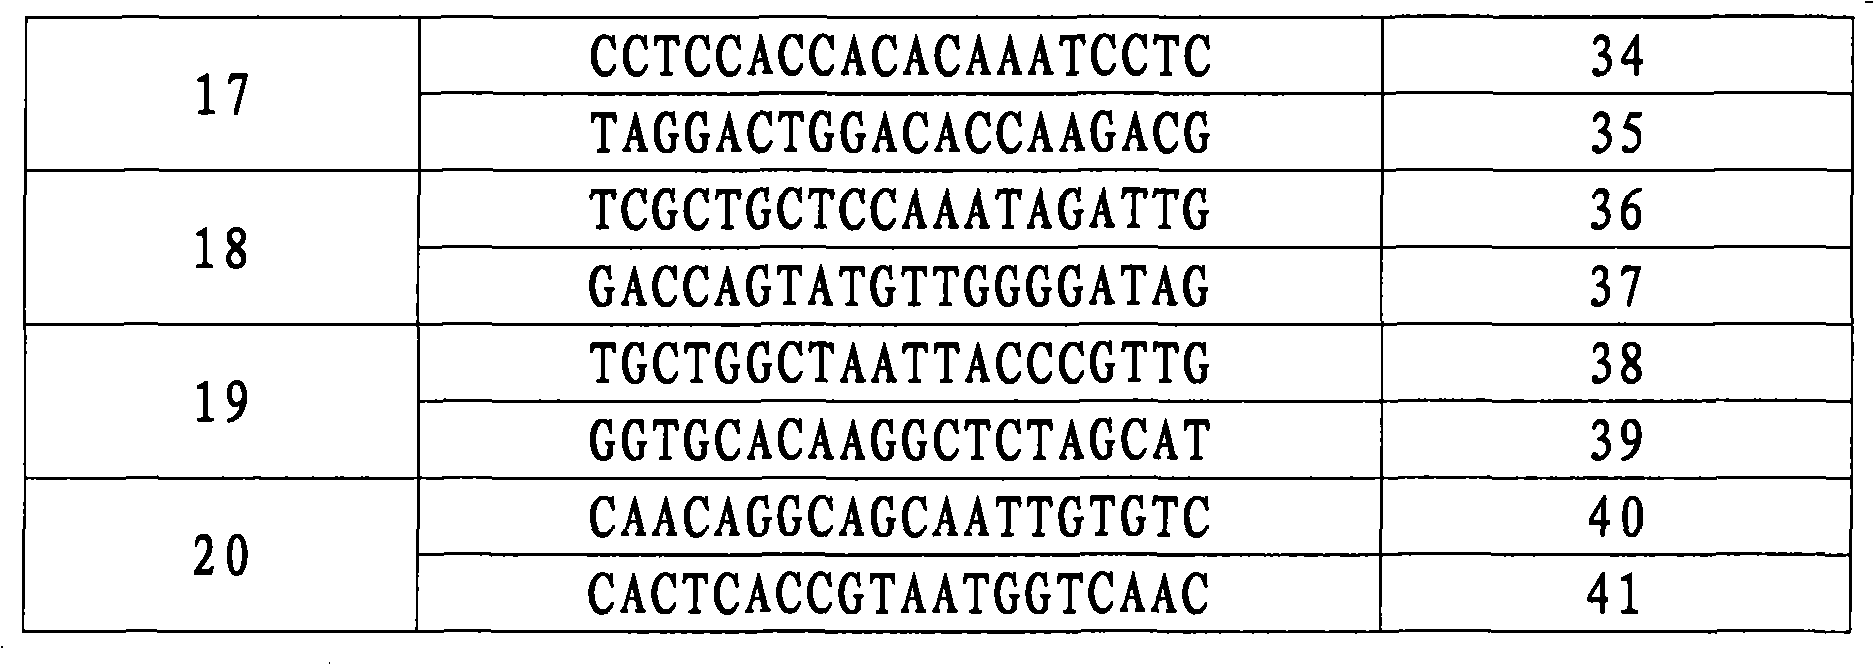 Molecular marker SIsv0372 in close linkage with foxtail millet herbicide resistant gene